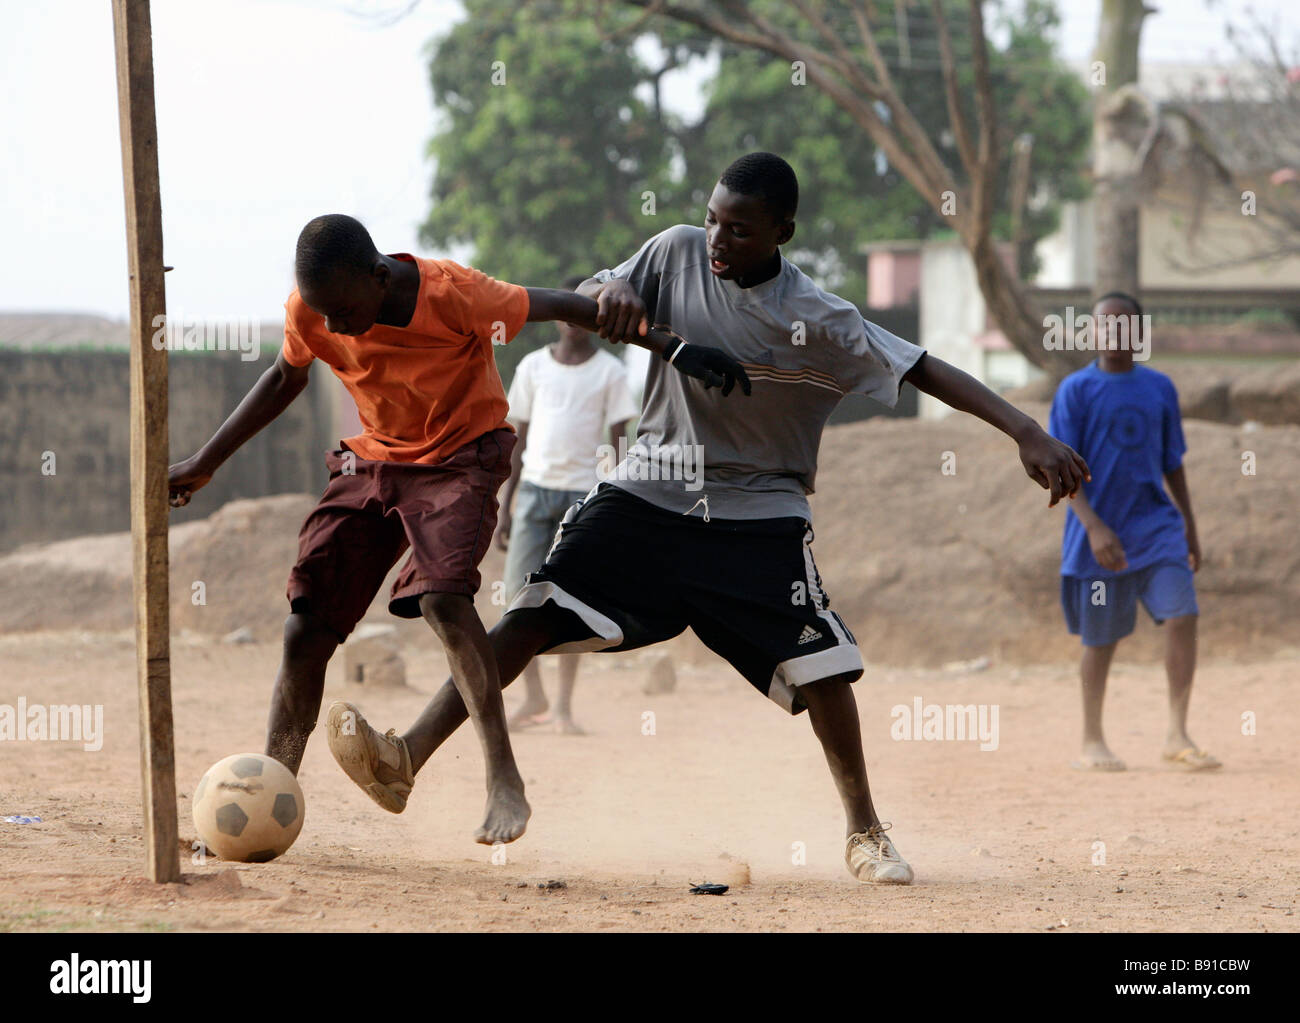 Nigeria: young boys play football, soccer Stock Photo